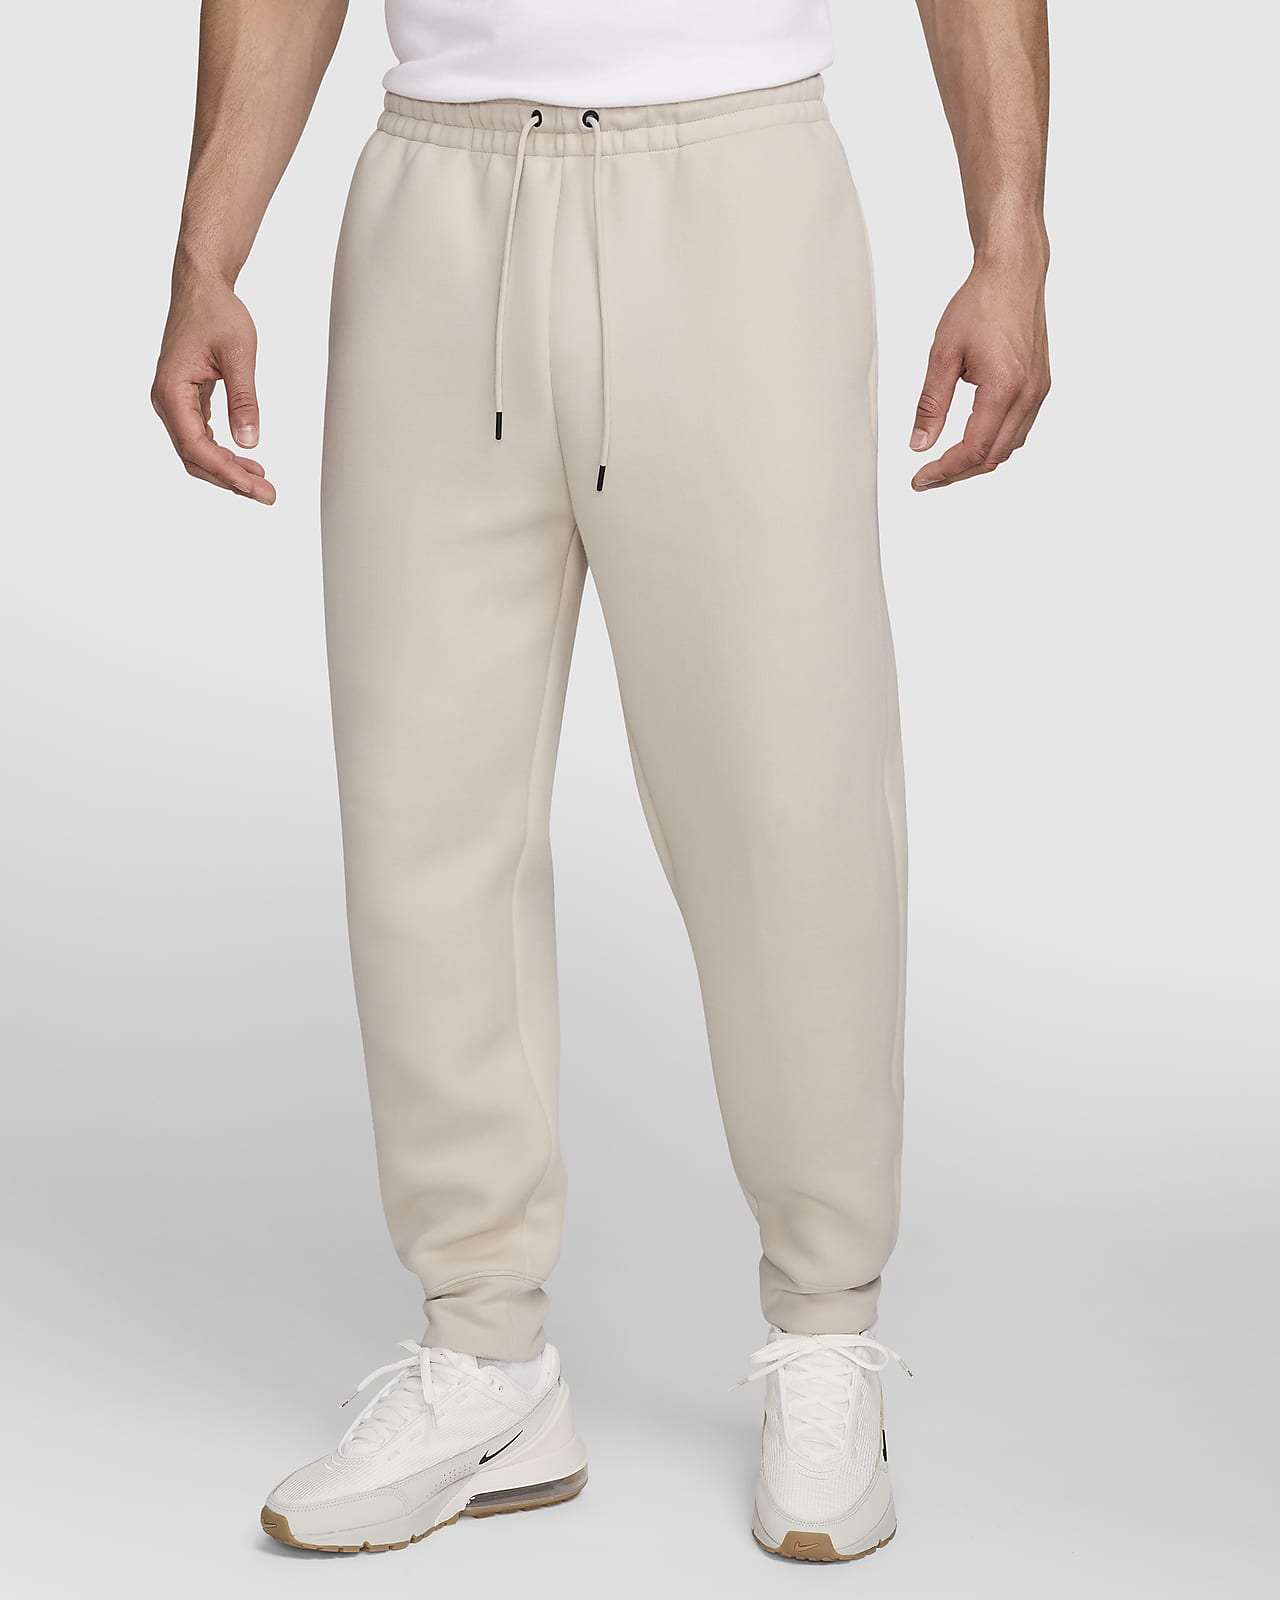 Pants de tejido Fleece para hombre Nike Tech